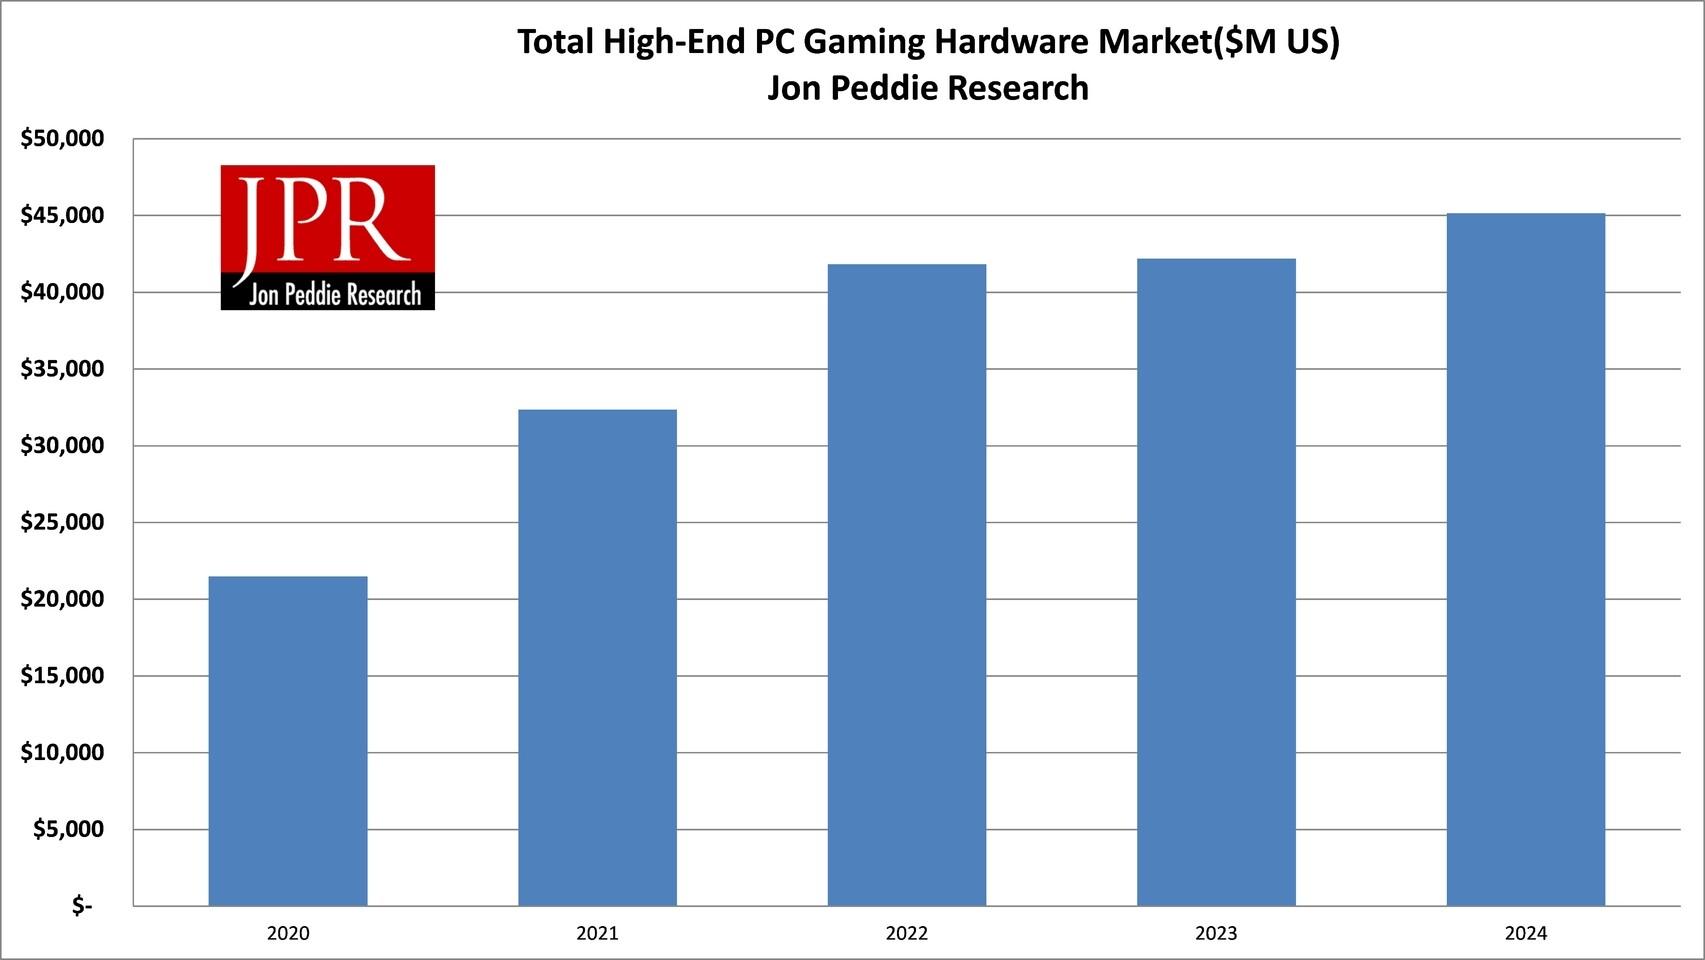 jpr prediction marche hardware pc gaming 2020 2024